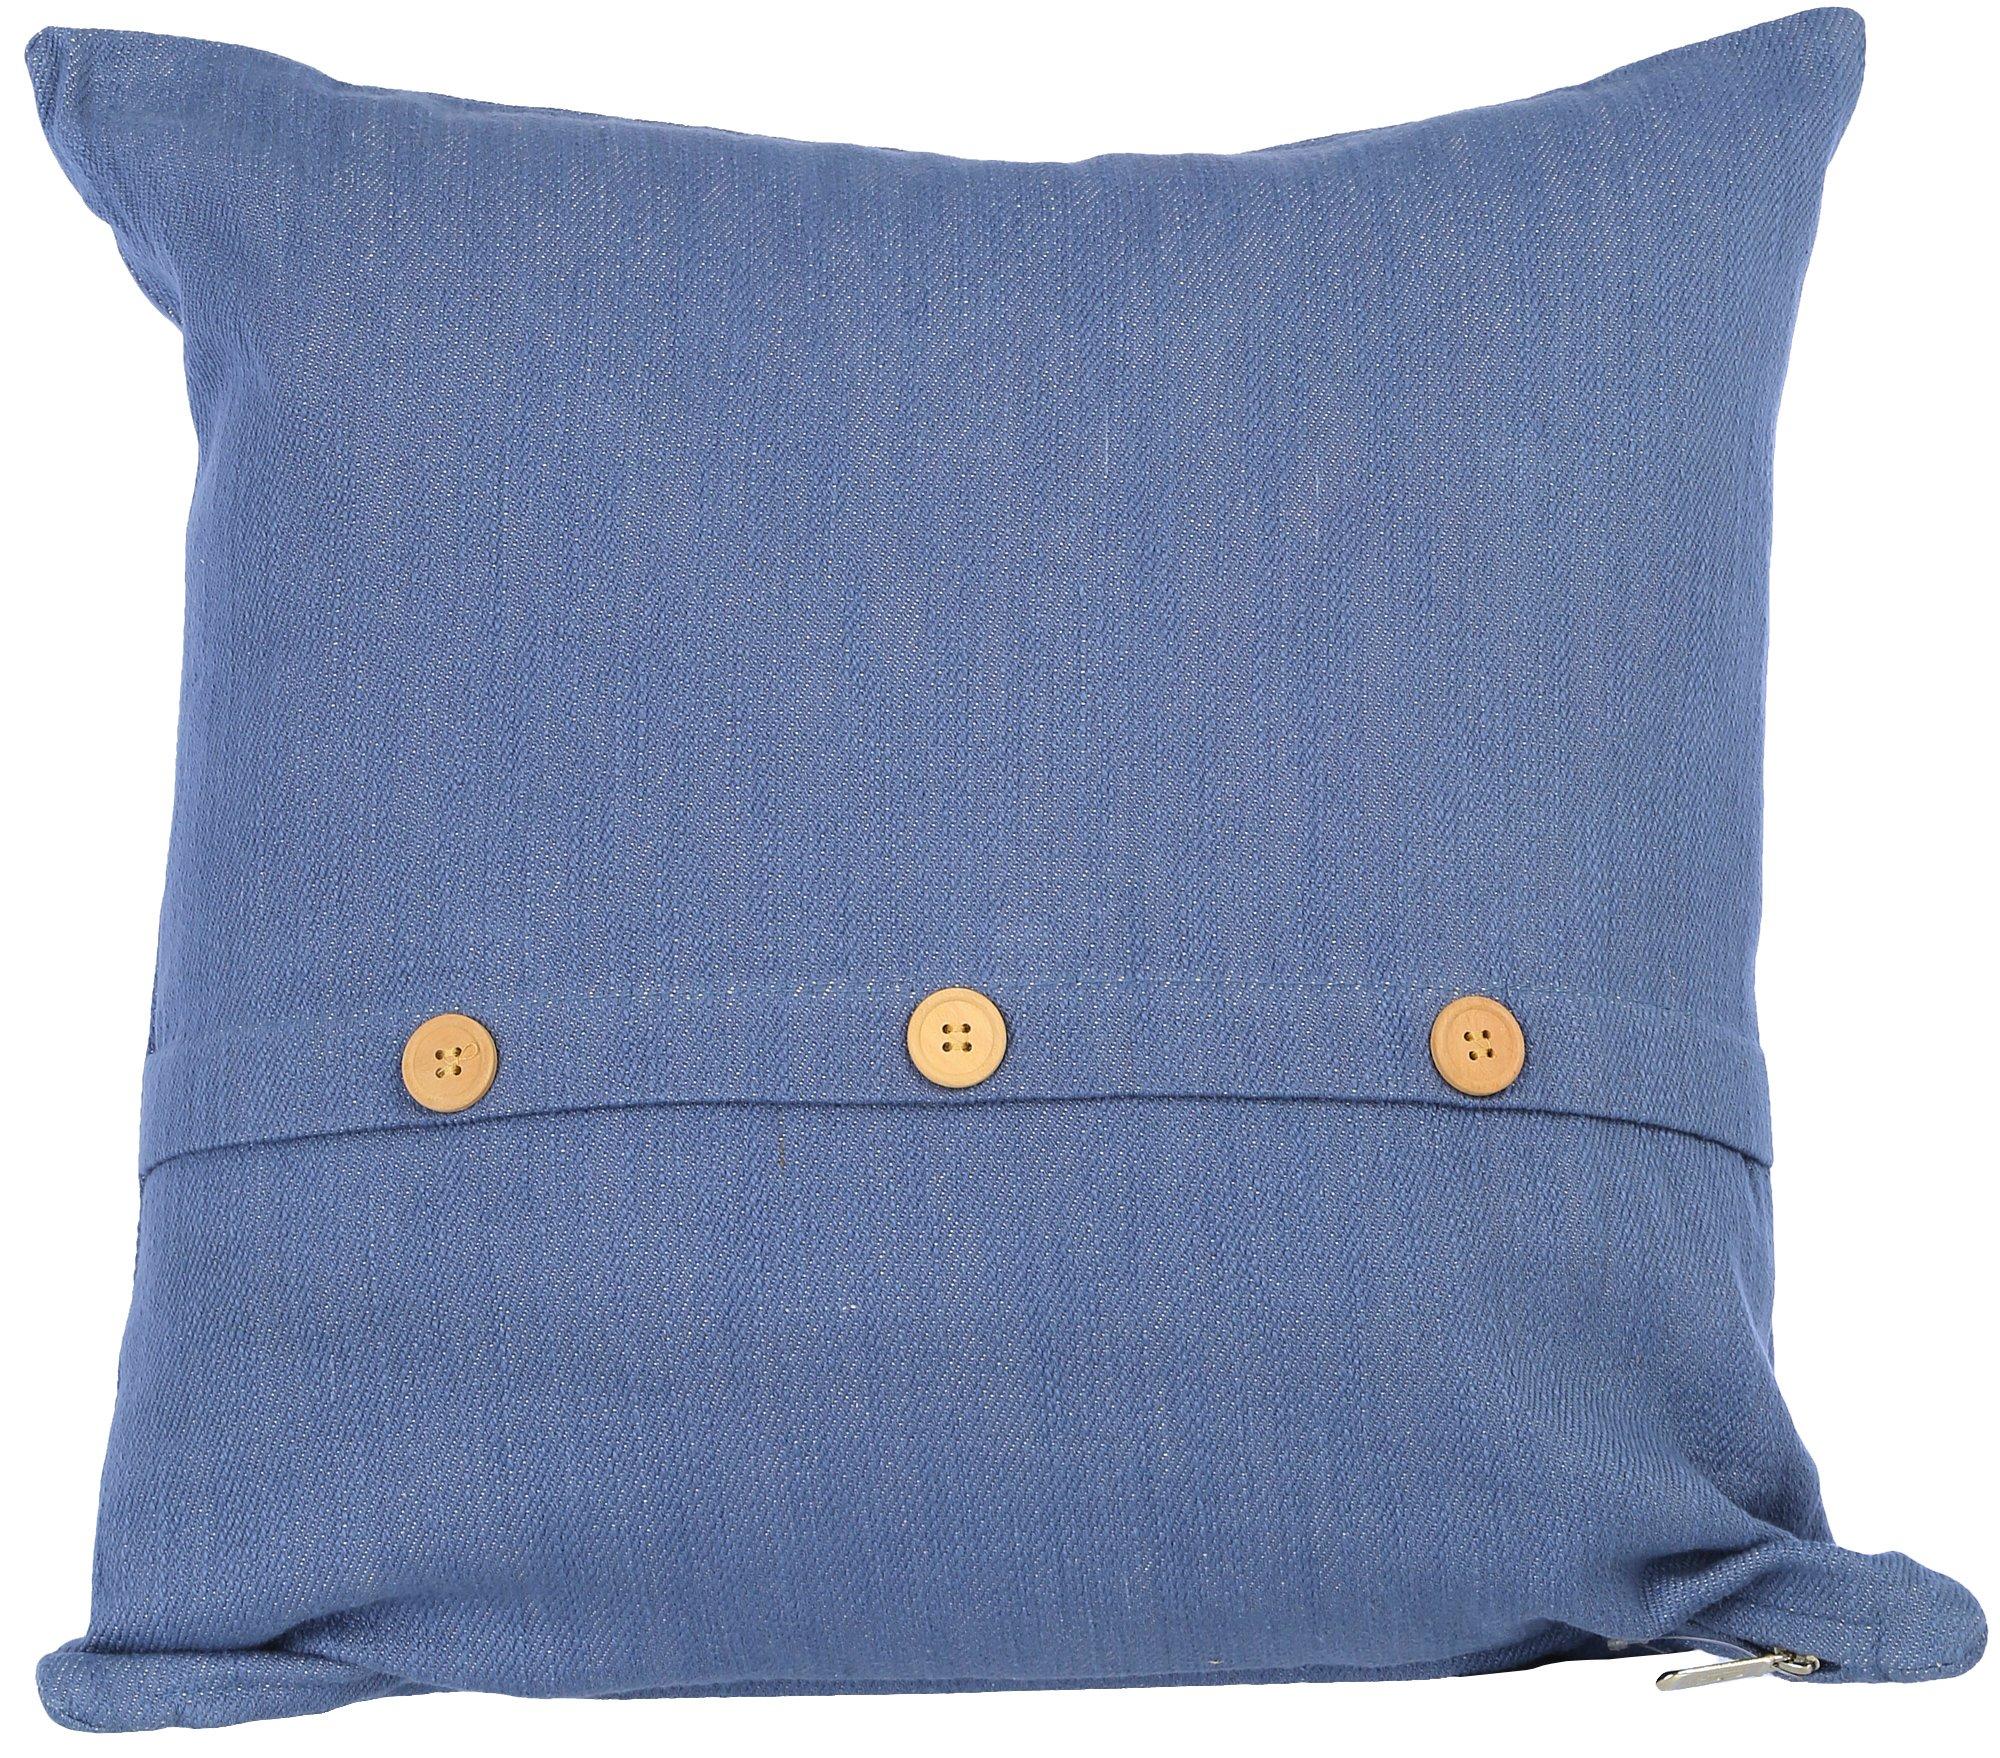 LR Home 20x20 Solid Button Decorative Pillow